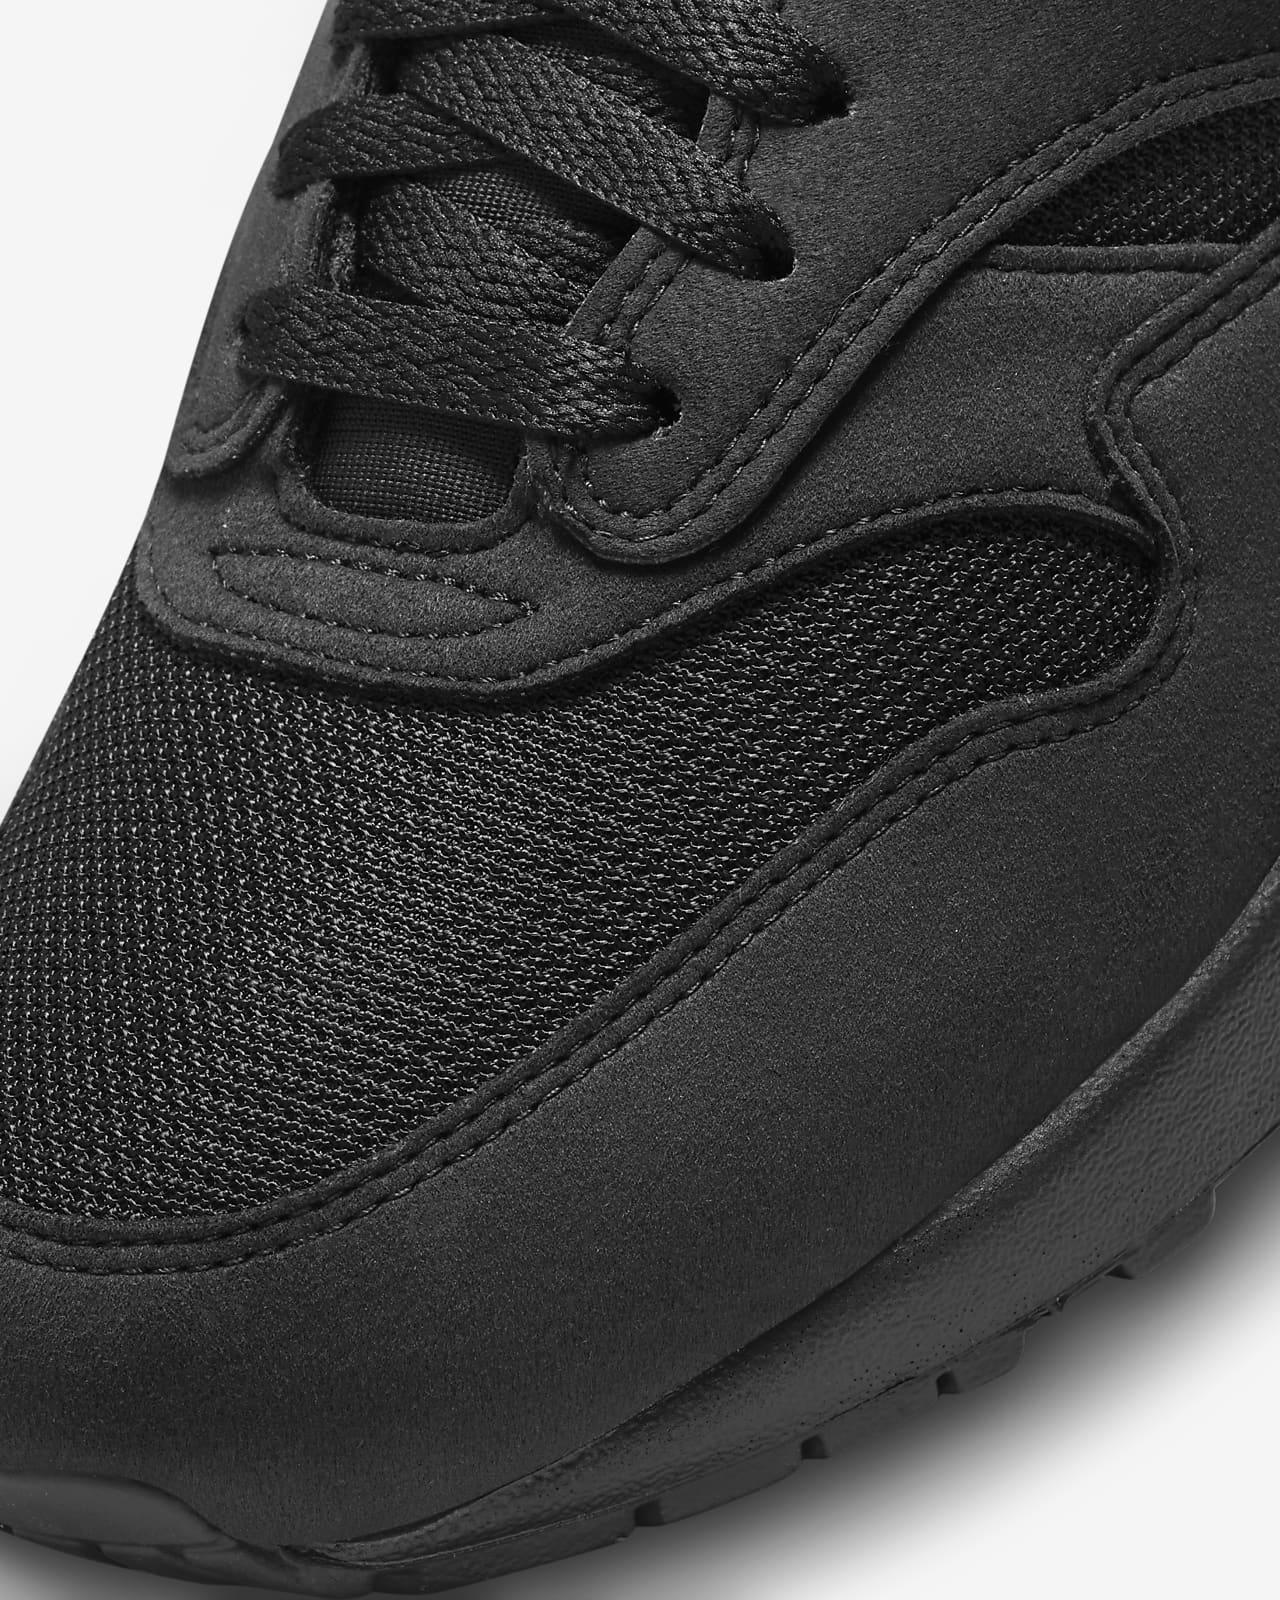 Faut-il acheter la Nike Air Max 1 White Photo Blue 2019 AH8145-112 ?   Chaussure sneakers homme, Chaussure homme mode, Chaussures de sport mode